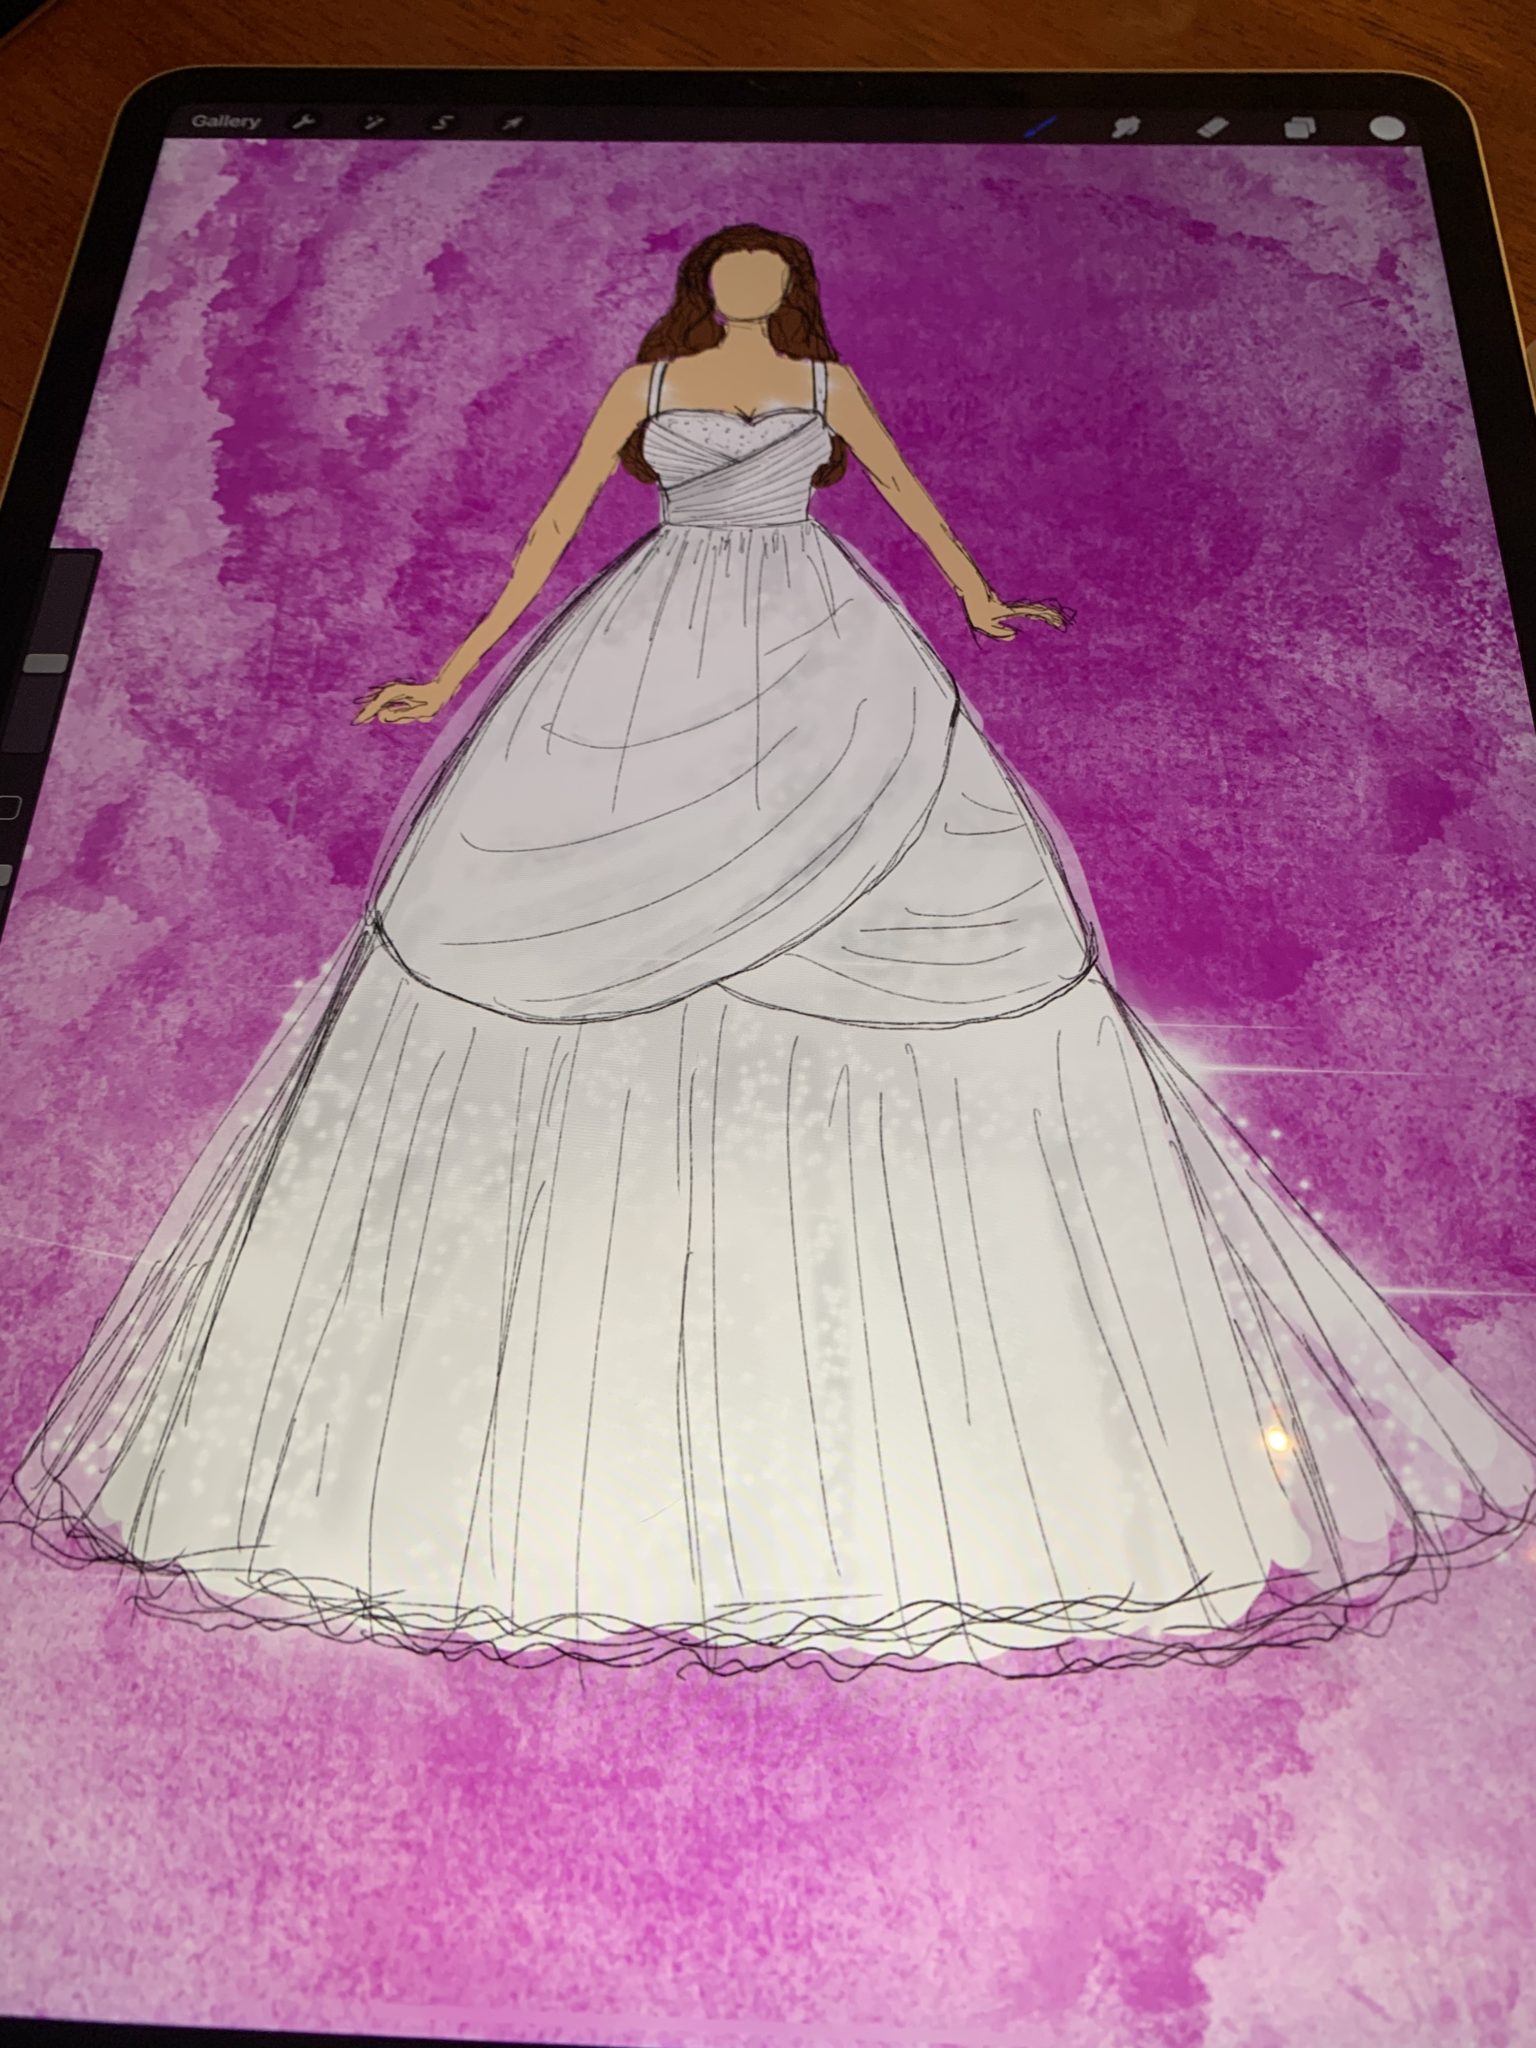 Sammi's final sketch of the wedding dress